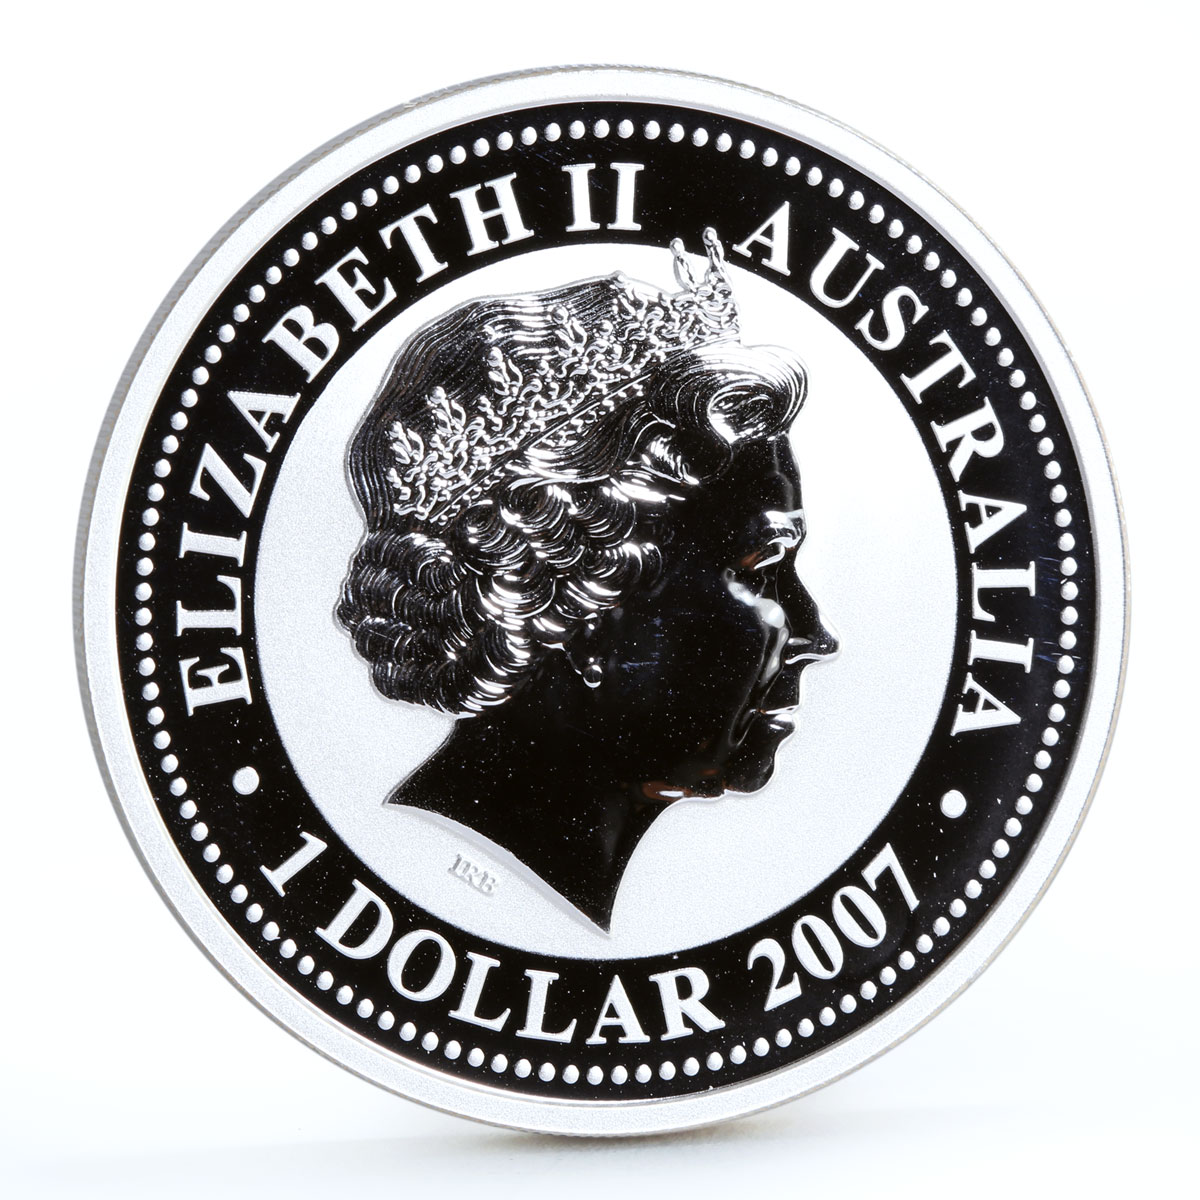 Australia 1 dollar Lunar Calendar I Year of the Ox gilded silver coin 2007